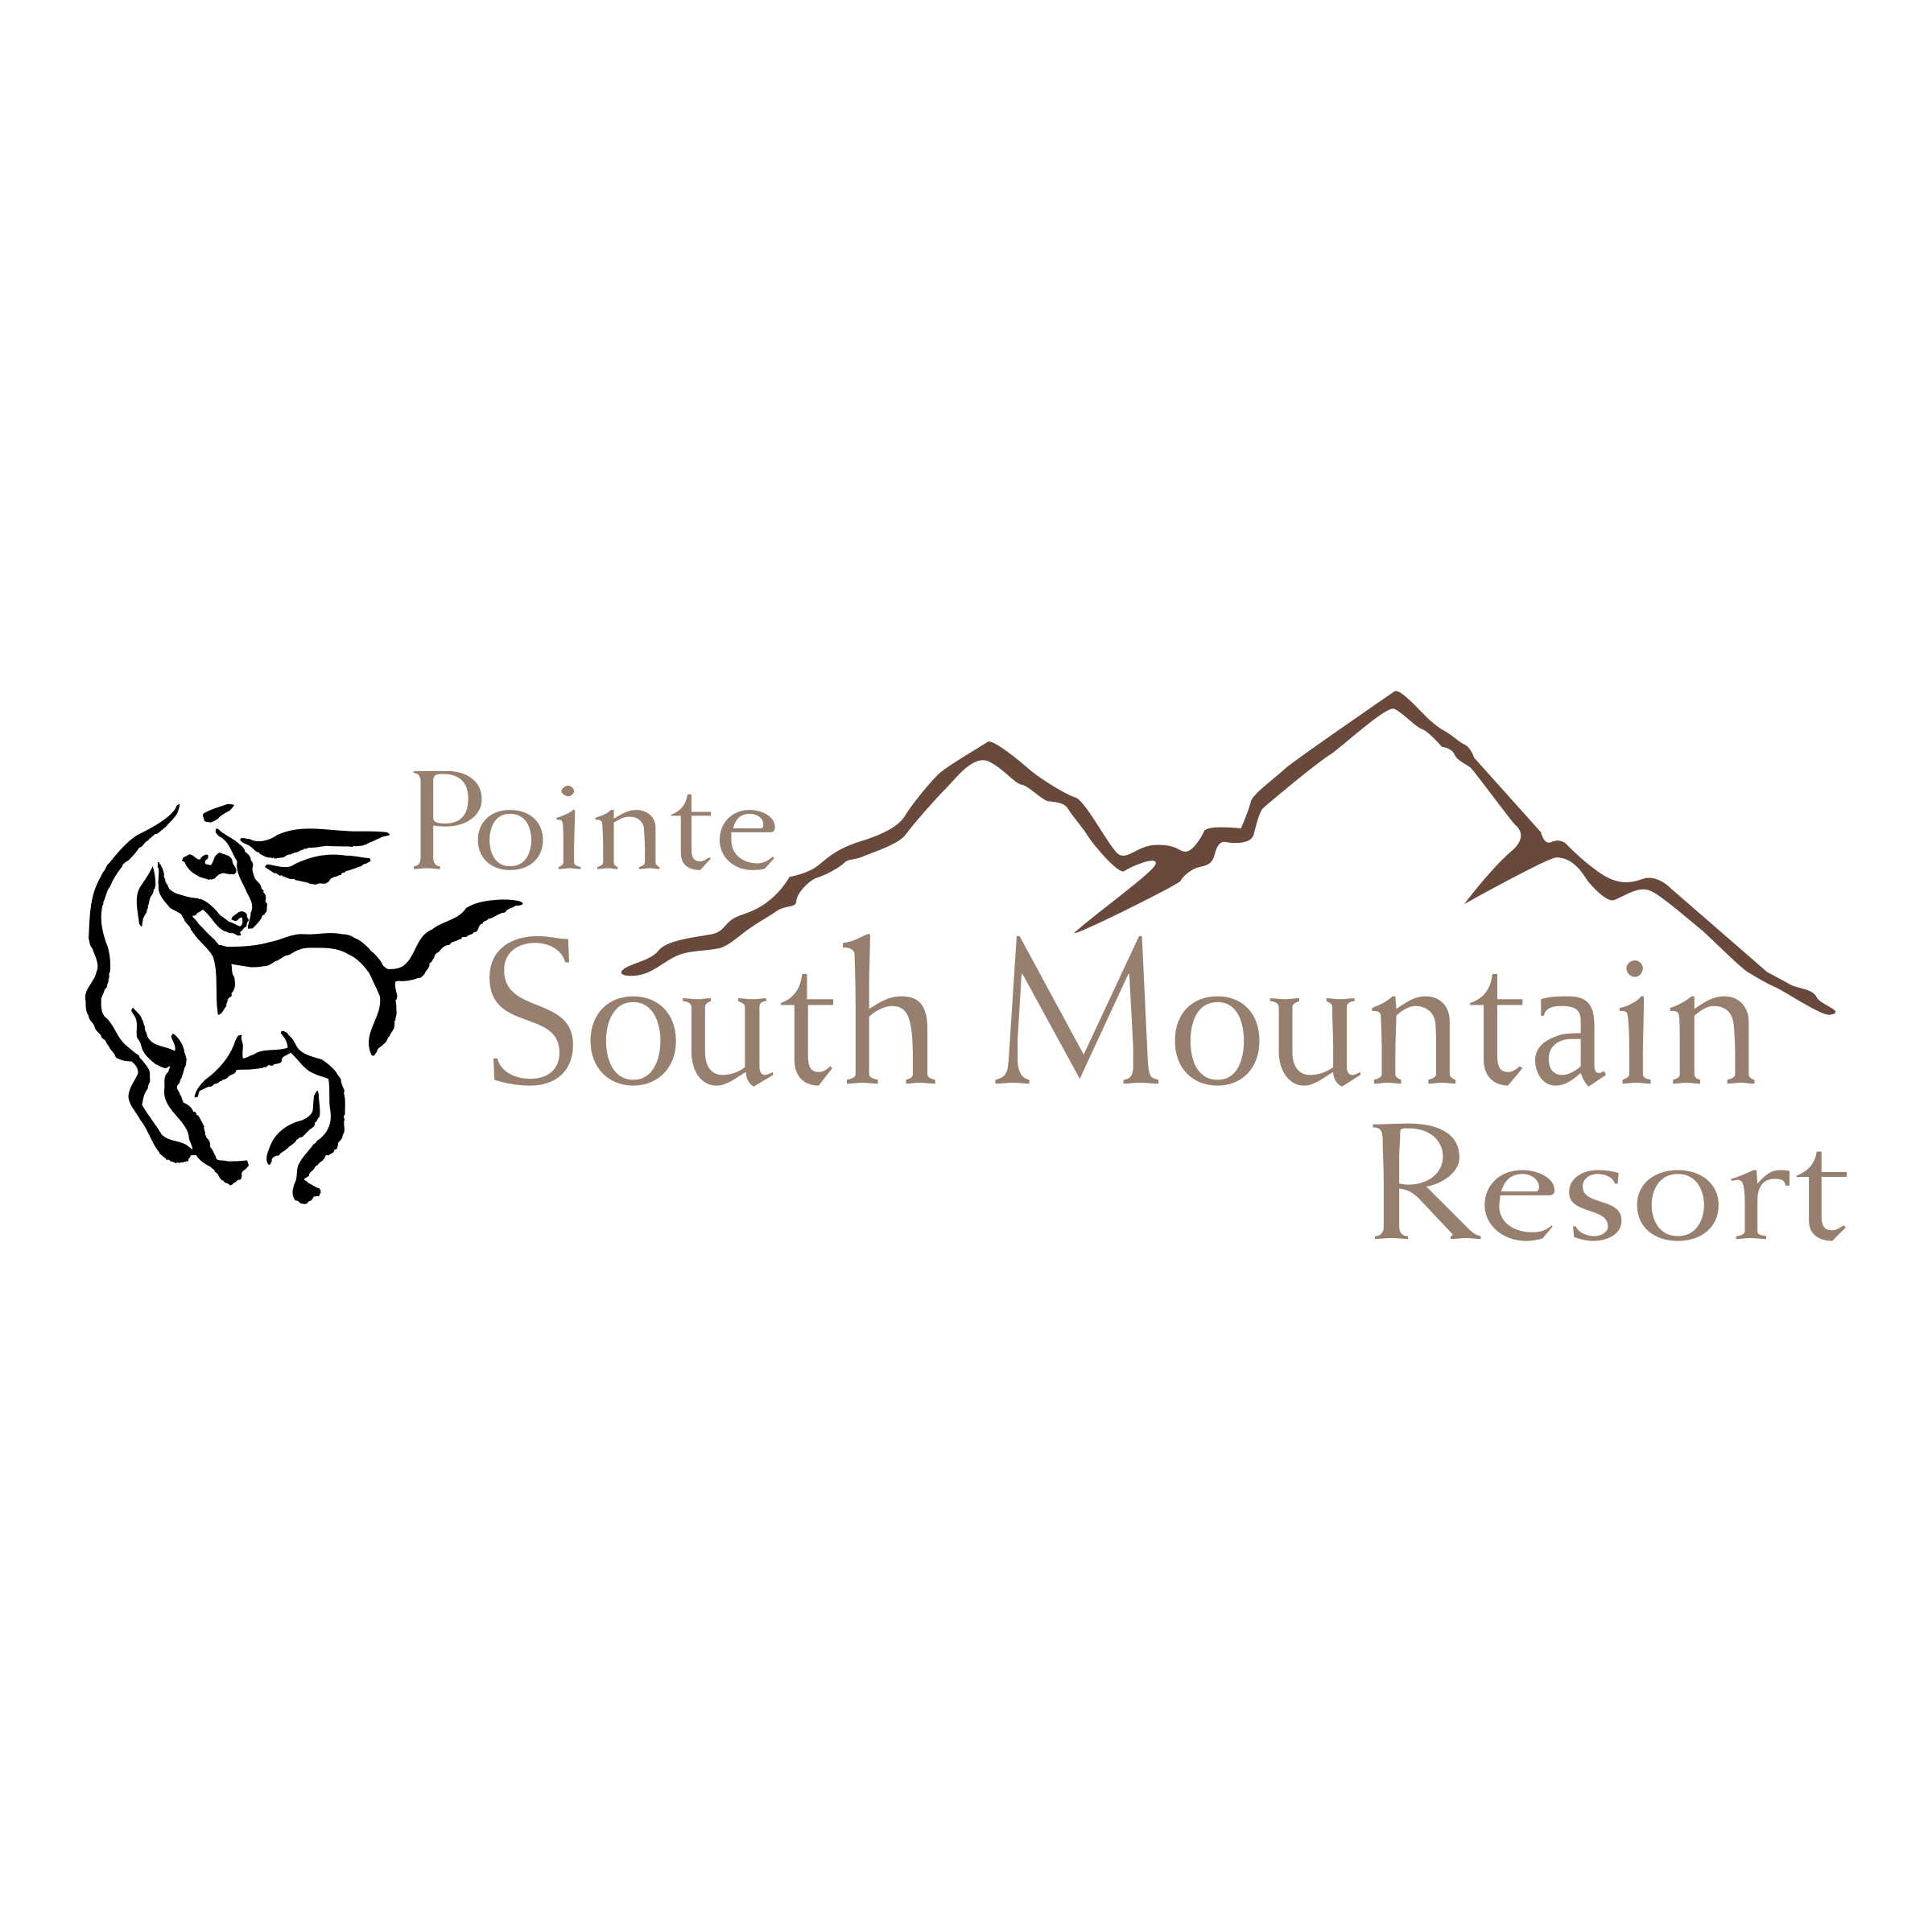 South Mountain Logo - Pointe South Mountain Resort Logo PNG Transparent & SVG Vector